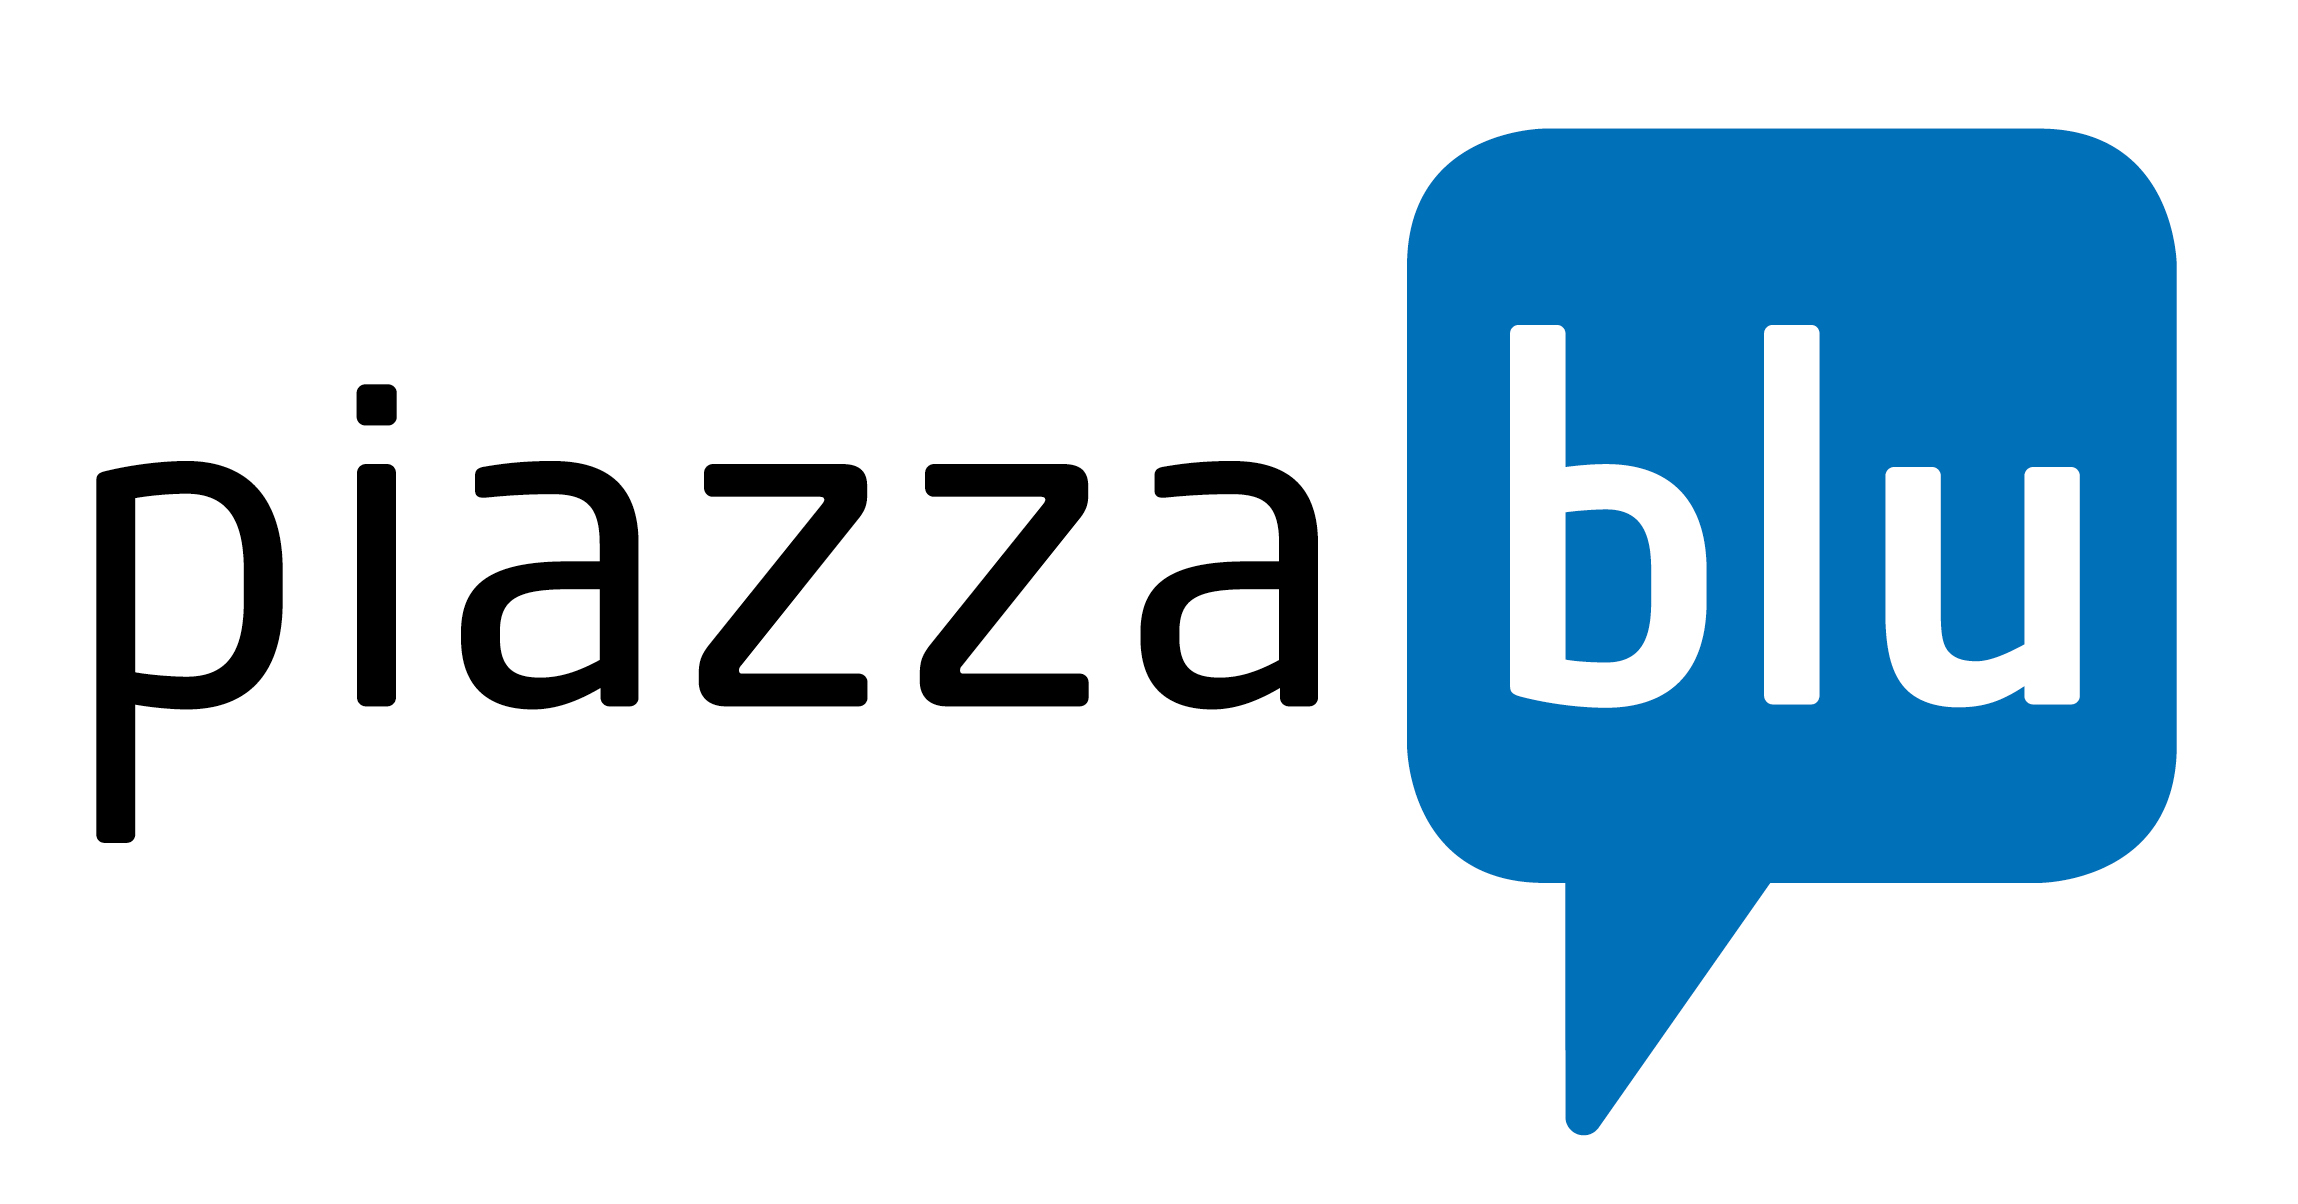 piazzablu logo 300dpi